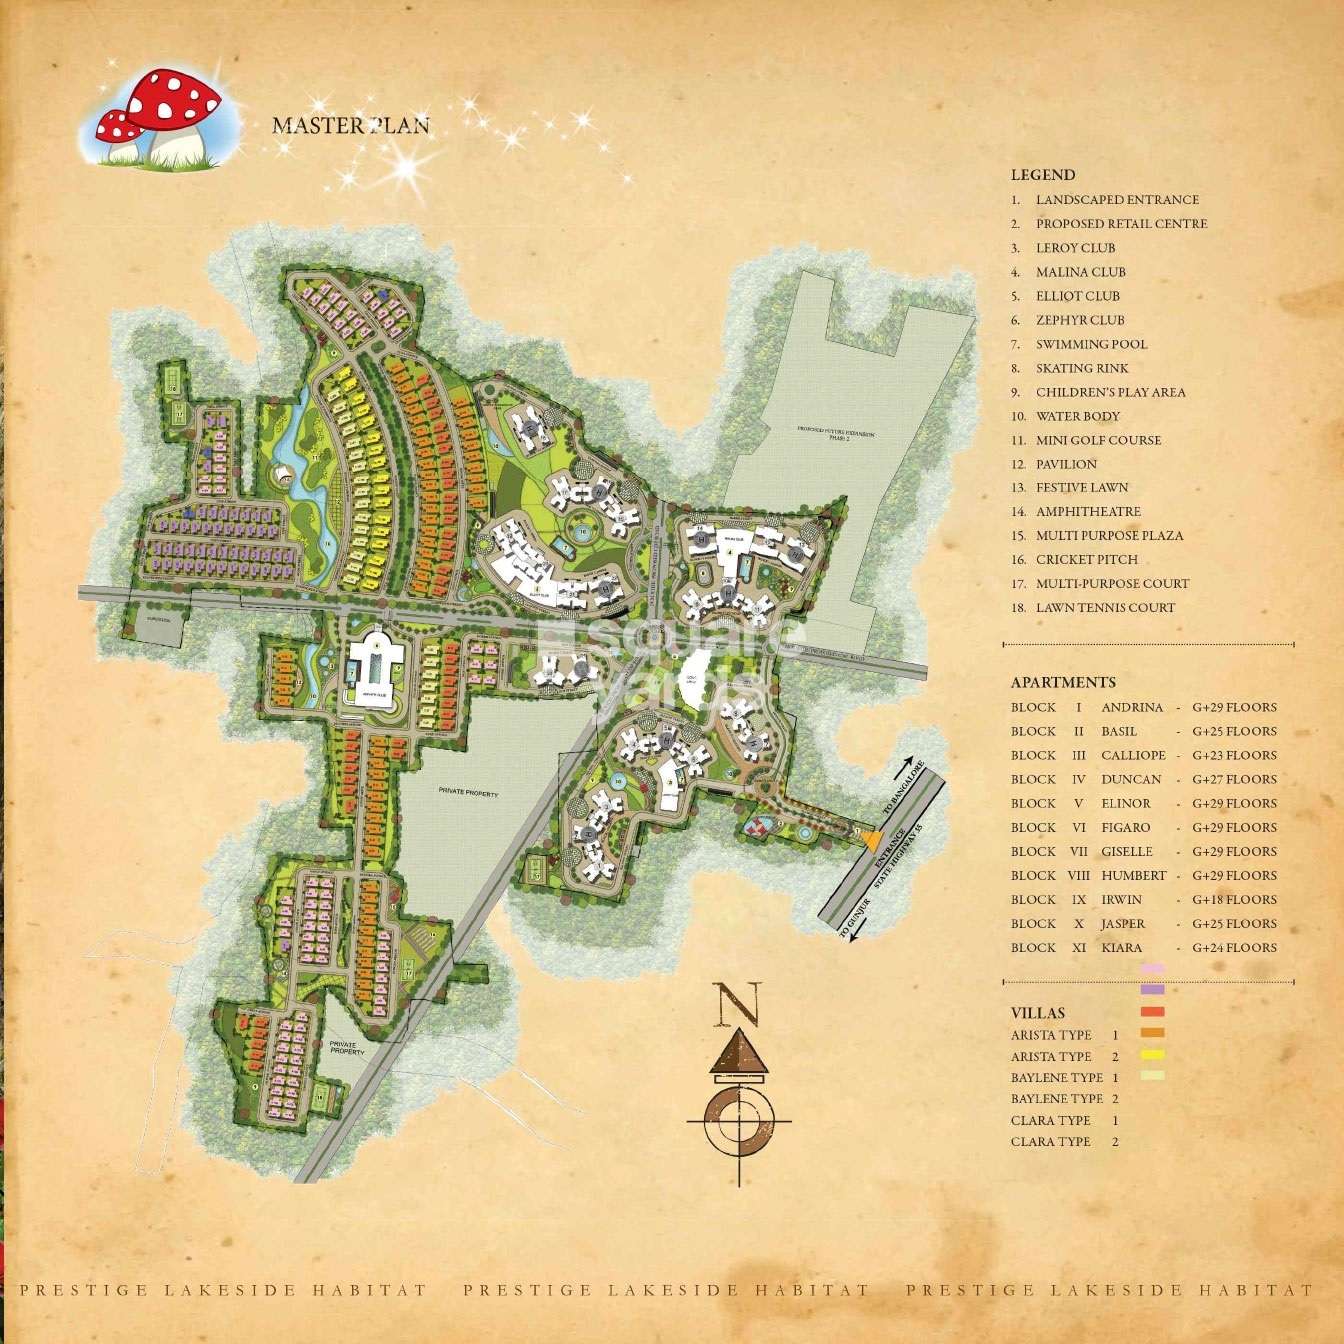 prestige lakeside habitat villa project master plan image1